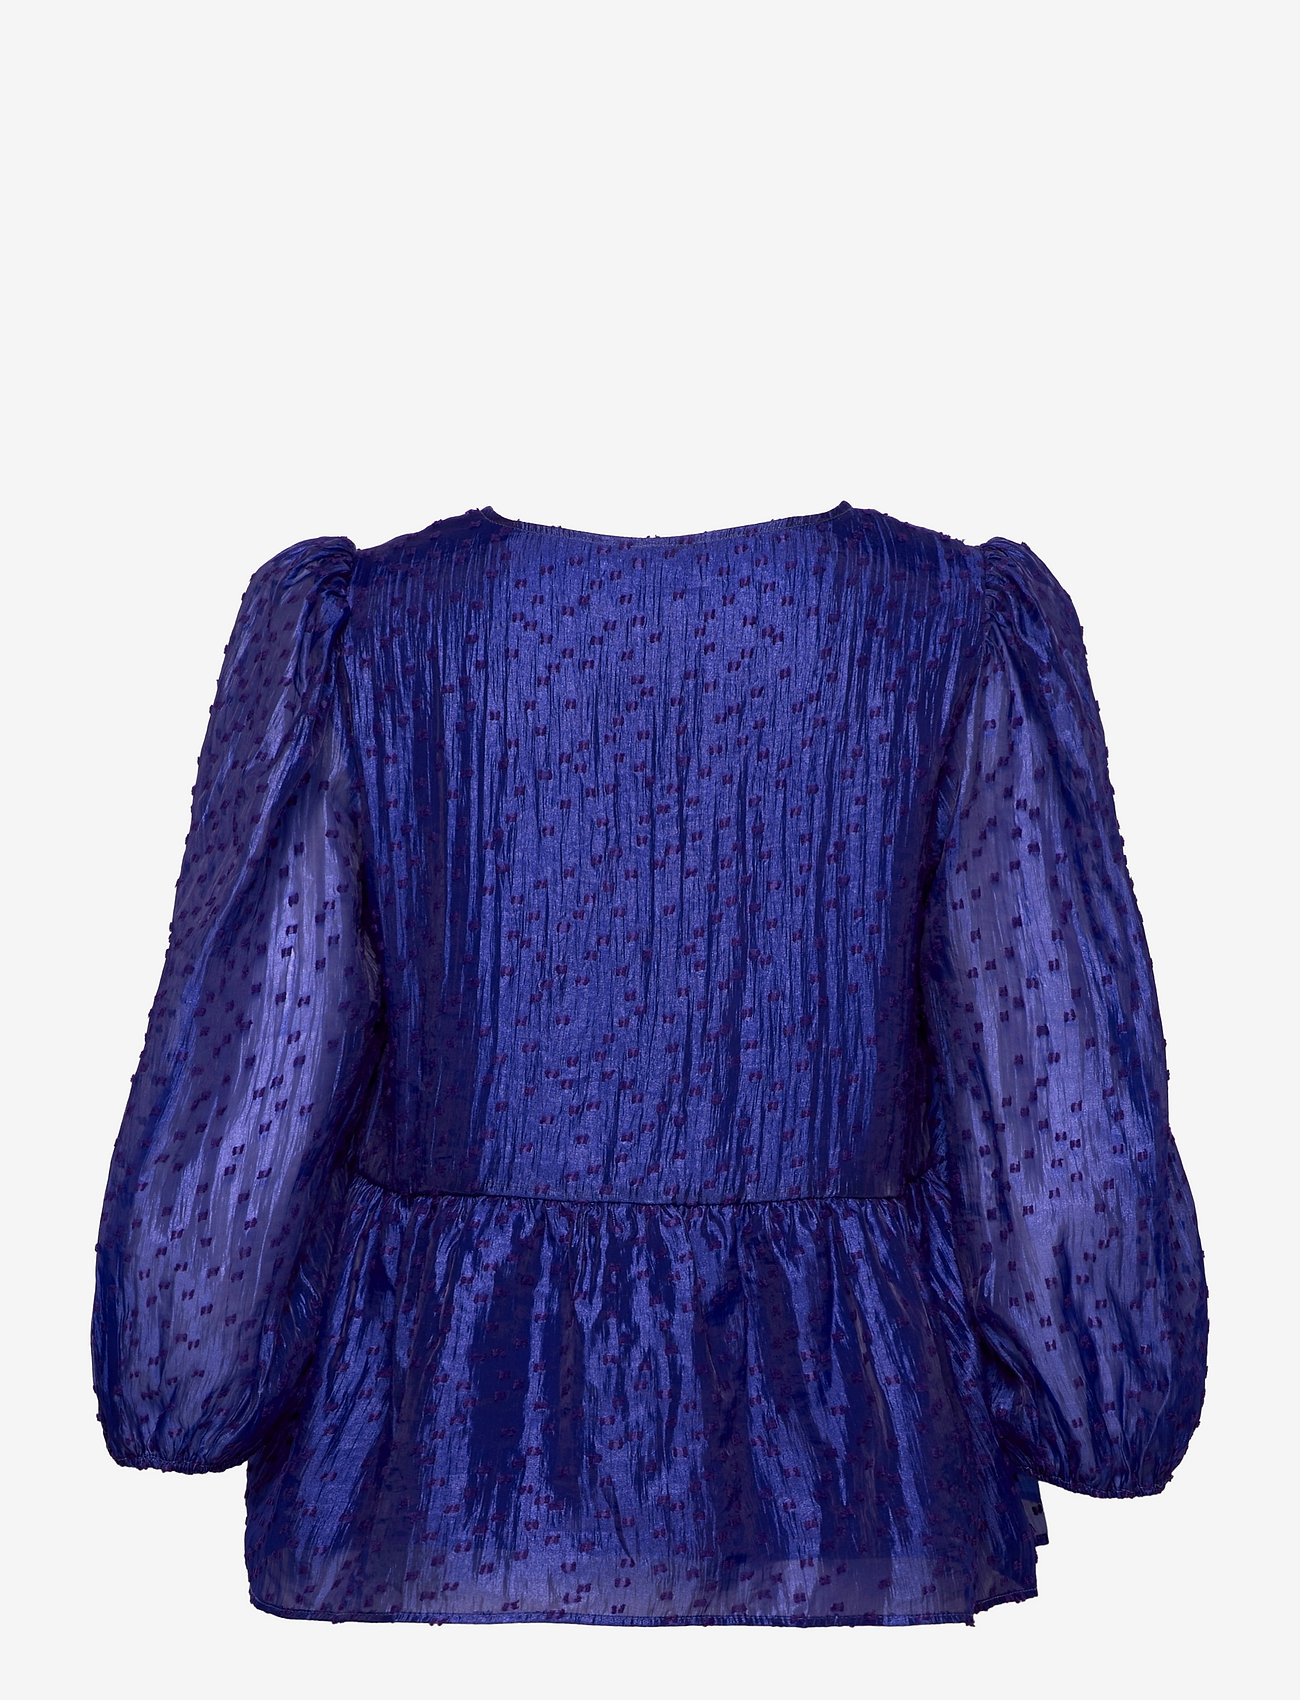 Modström - Tynna top - long-sleeved blouses - clematis blue - 1